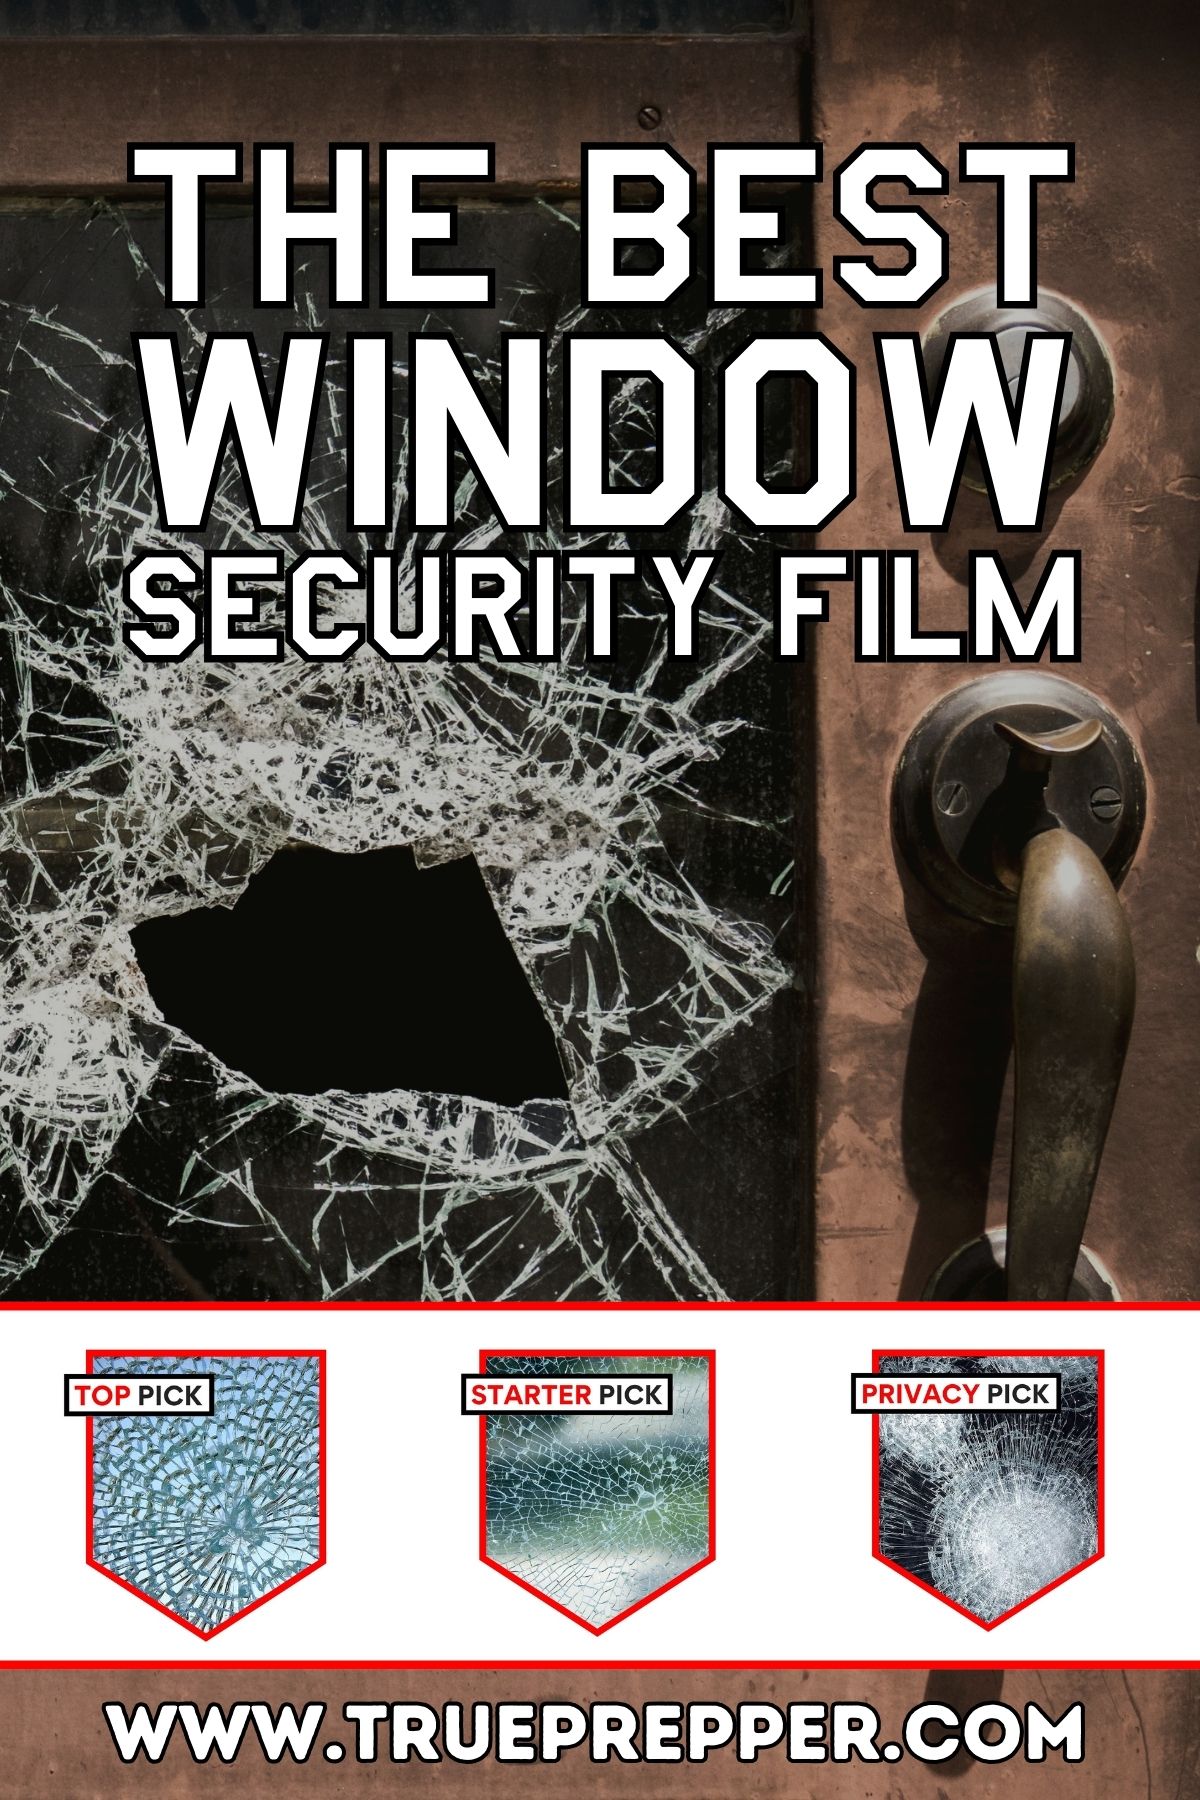 The Best Window Security Film